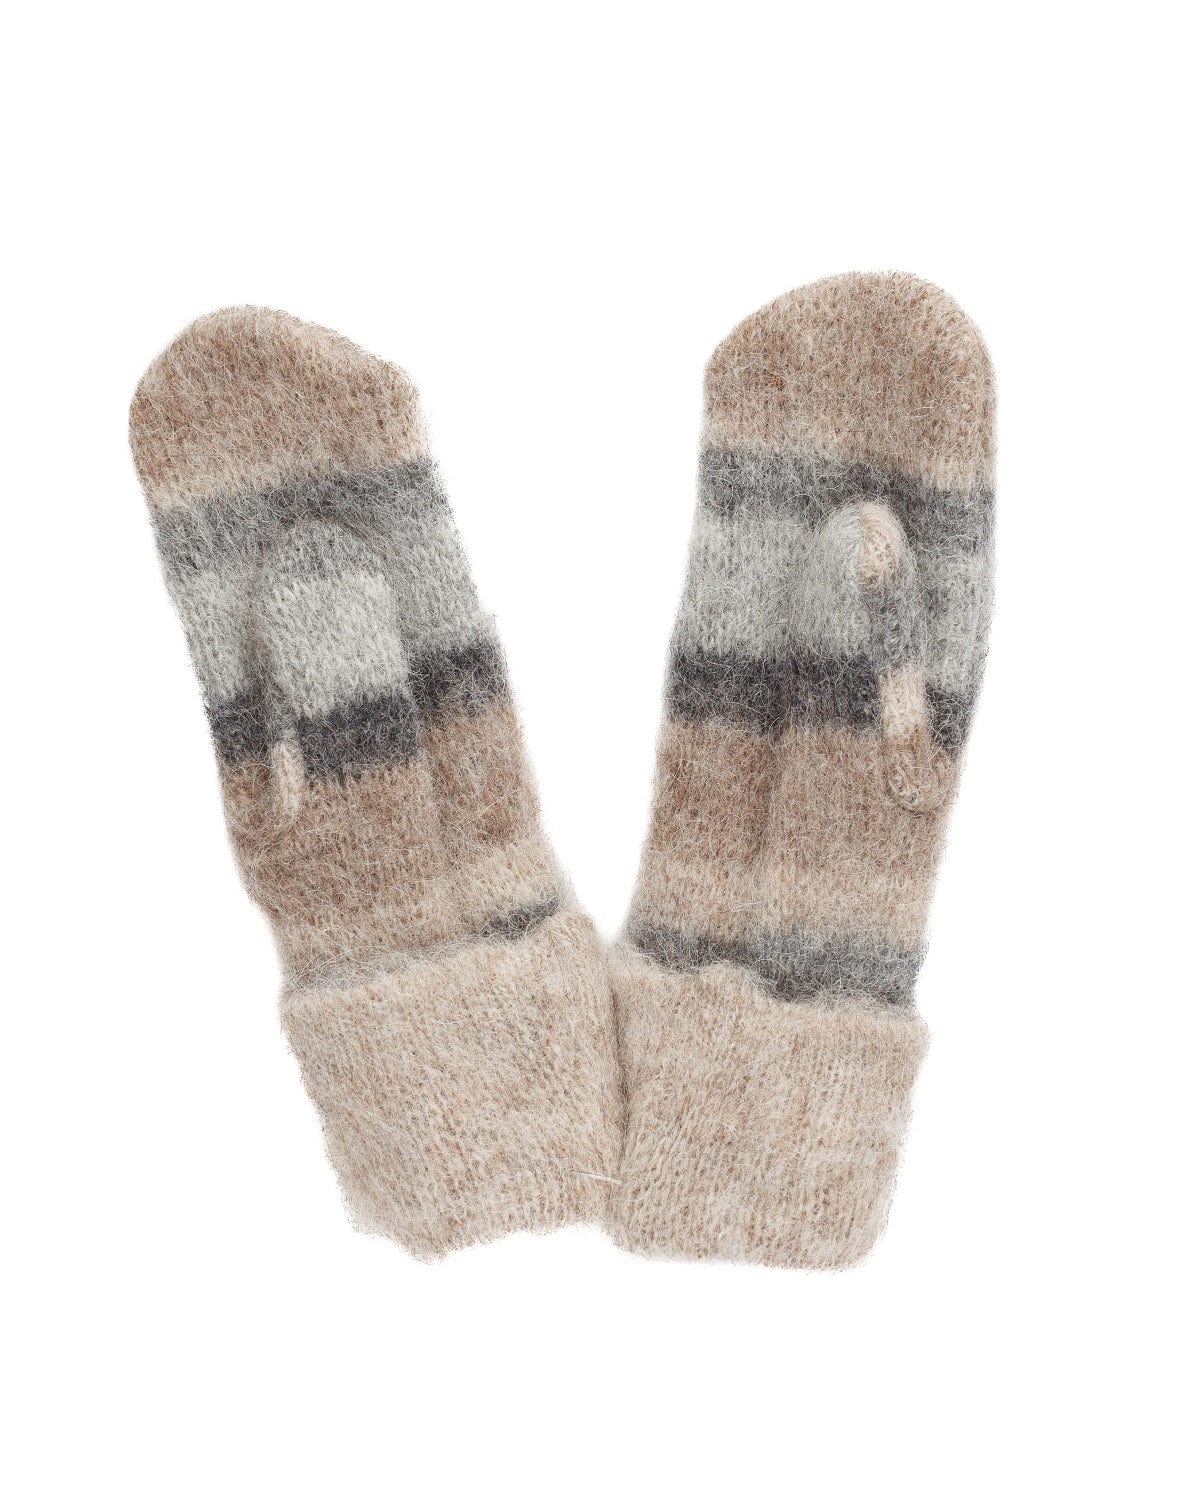 Brushed wool mittens 8-petalled rose pattern - White / Beige / Grey - The Icelandic Store